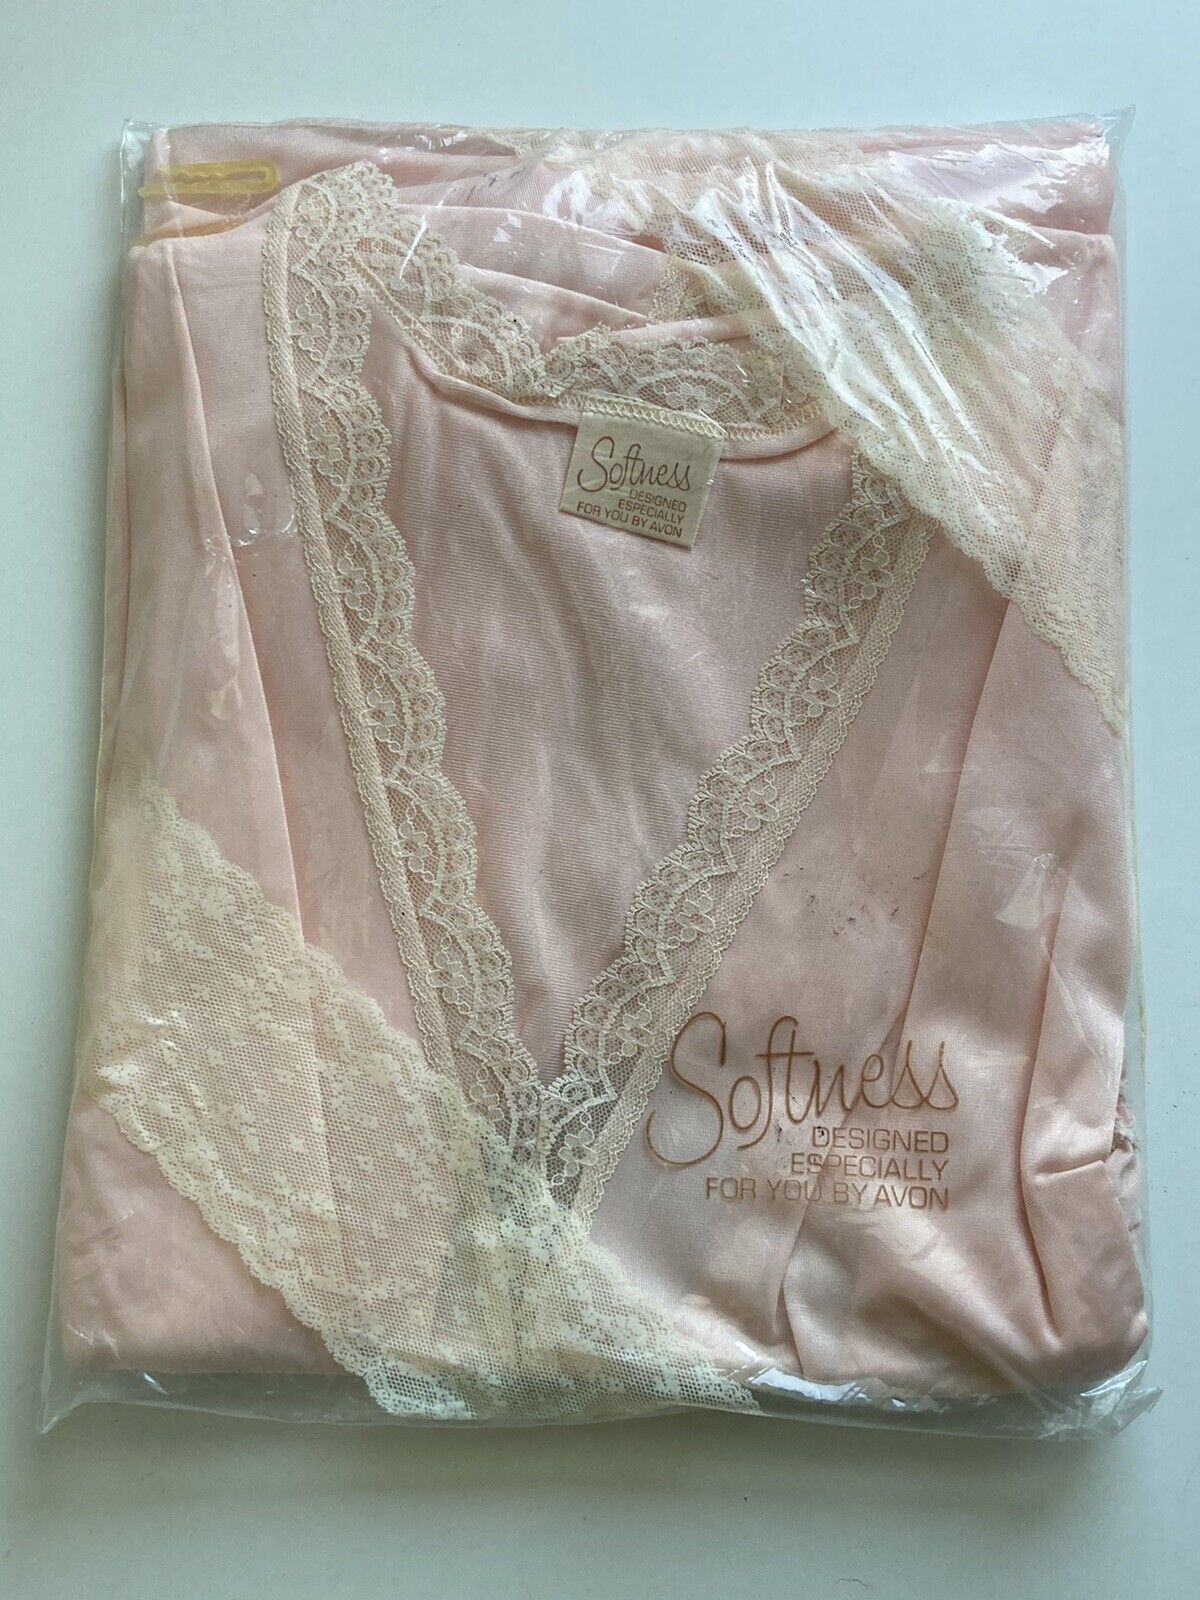 NEW Vintage Nightgown Robe Set Avon Softness Brand Pink Sz 16-18 NEW OLD STOCK